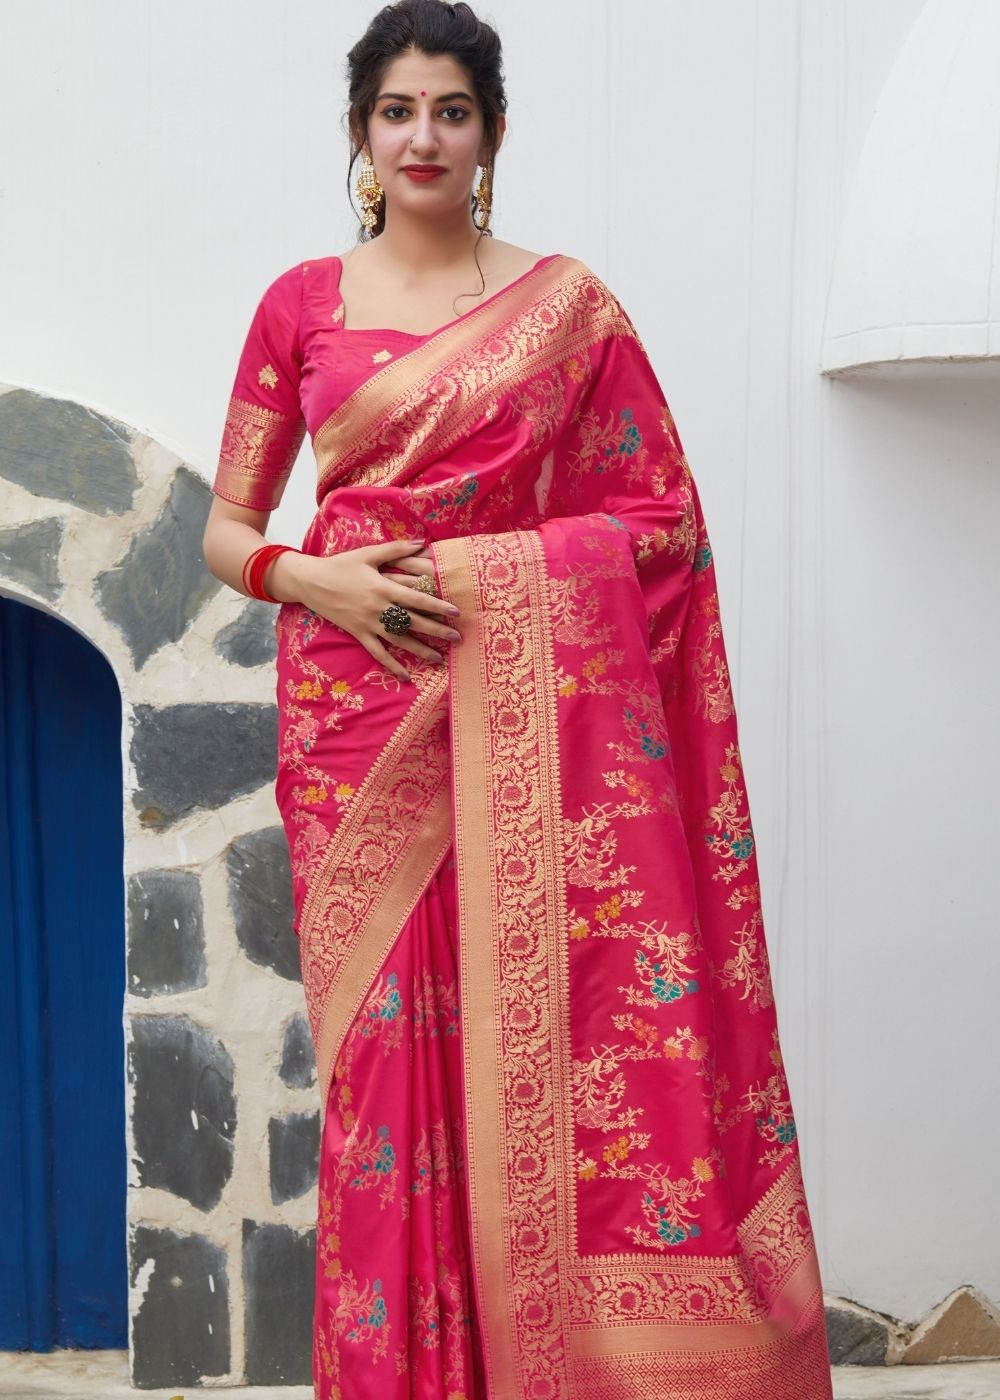 Magenta Silk Saree with Thread Embroidery work and Golden Zari Border - Colorful Saree